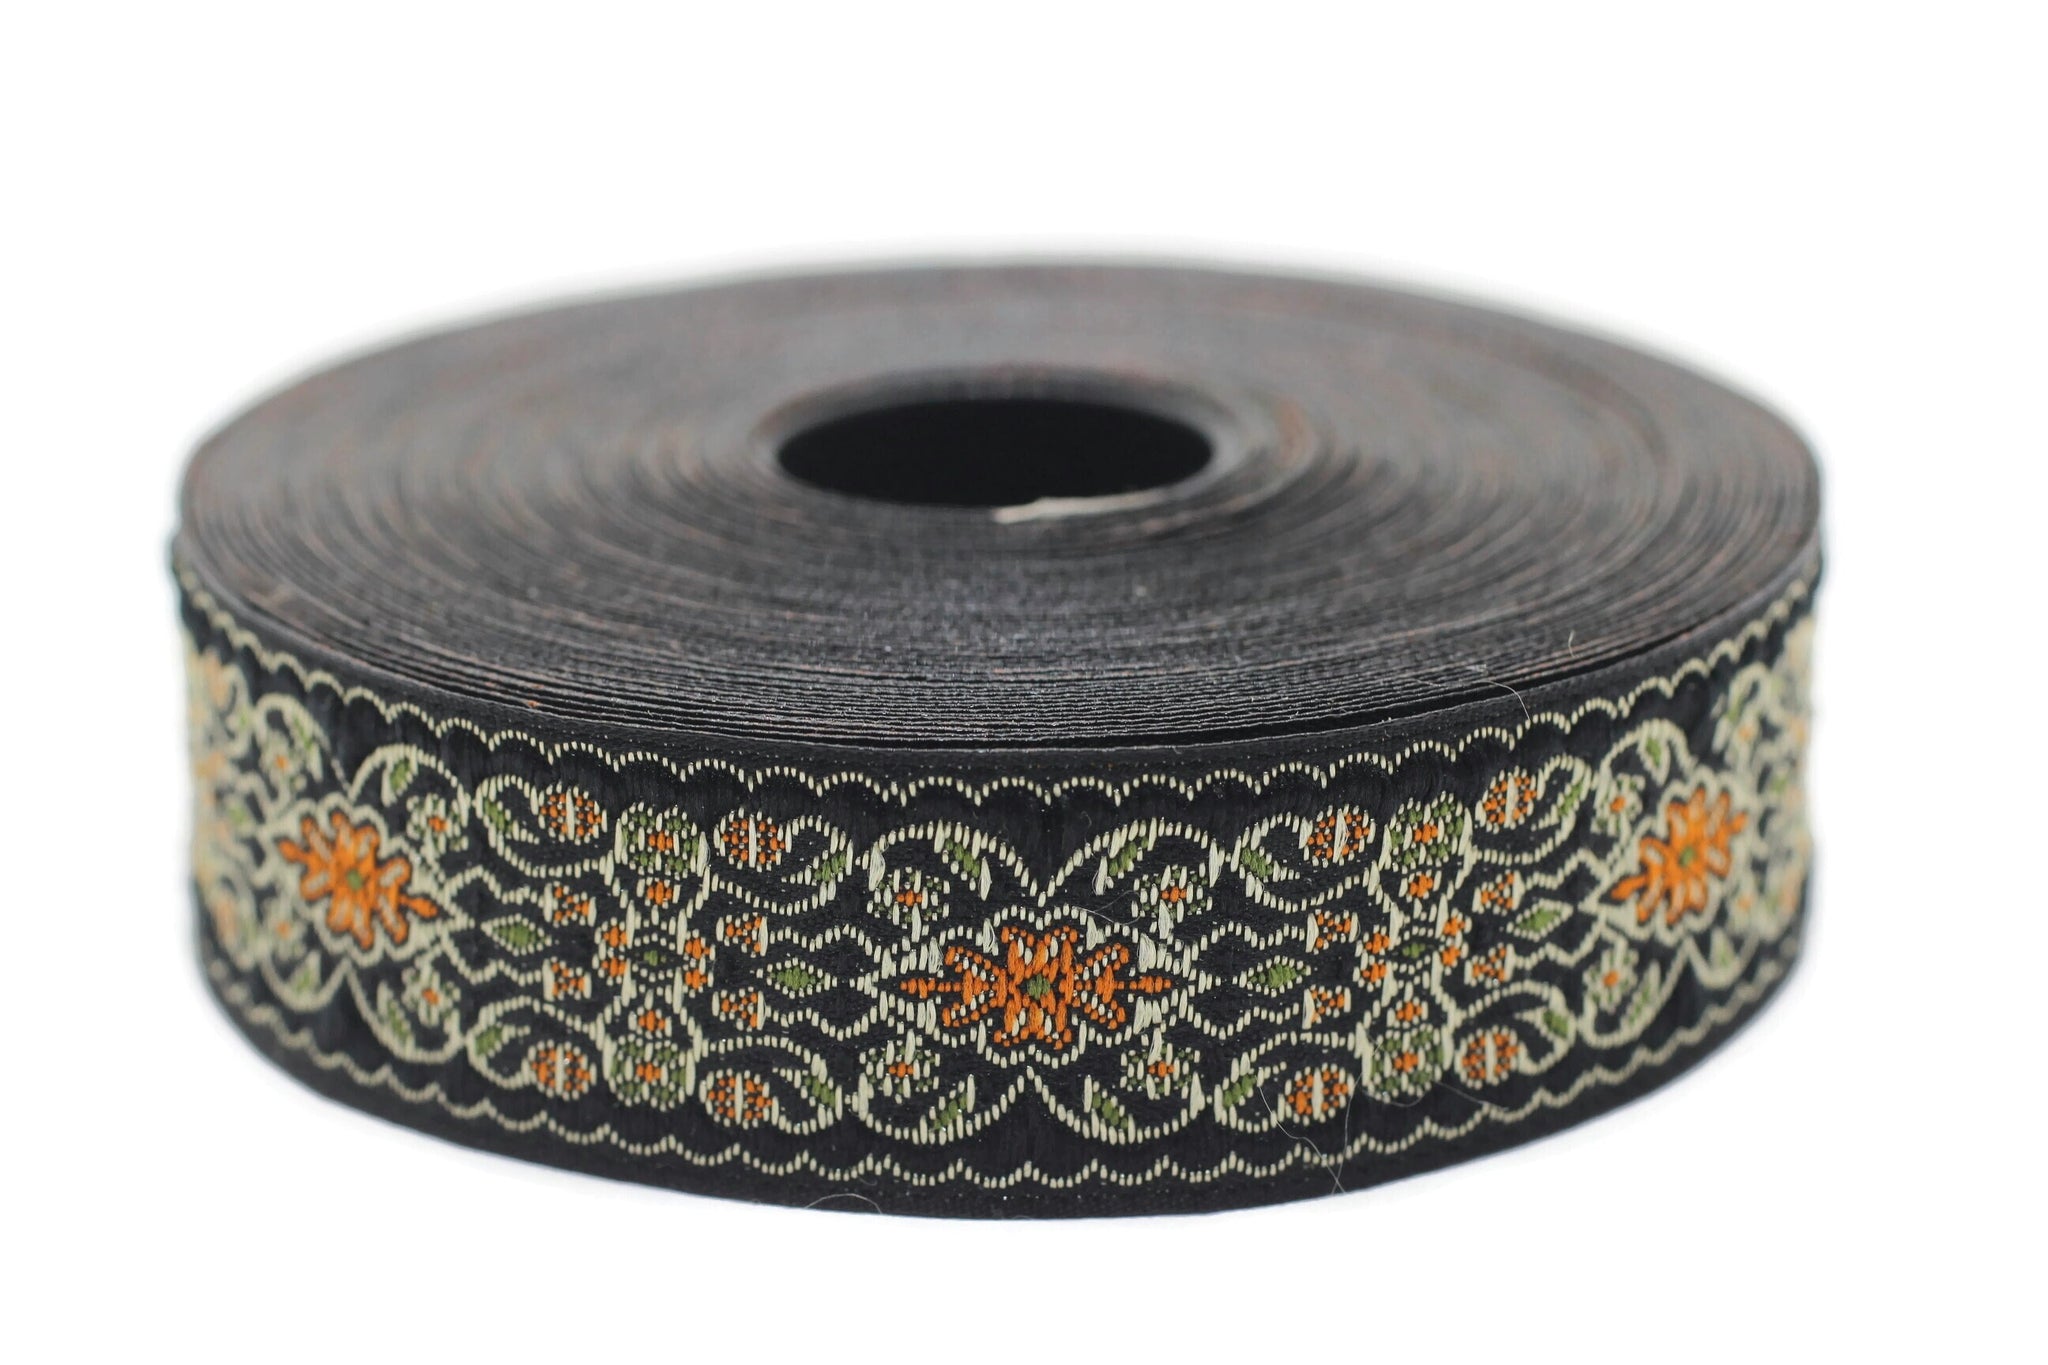 25 mm Black&Orange Jacquard ribbon 0.98 inches, Decorative Craft Ribbon, Sewing, Jacquard ribbons, Trim, woven ribbons, collar supply, 25939